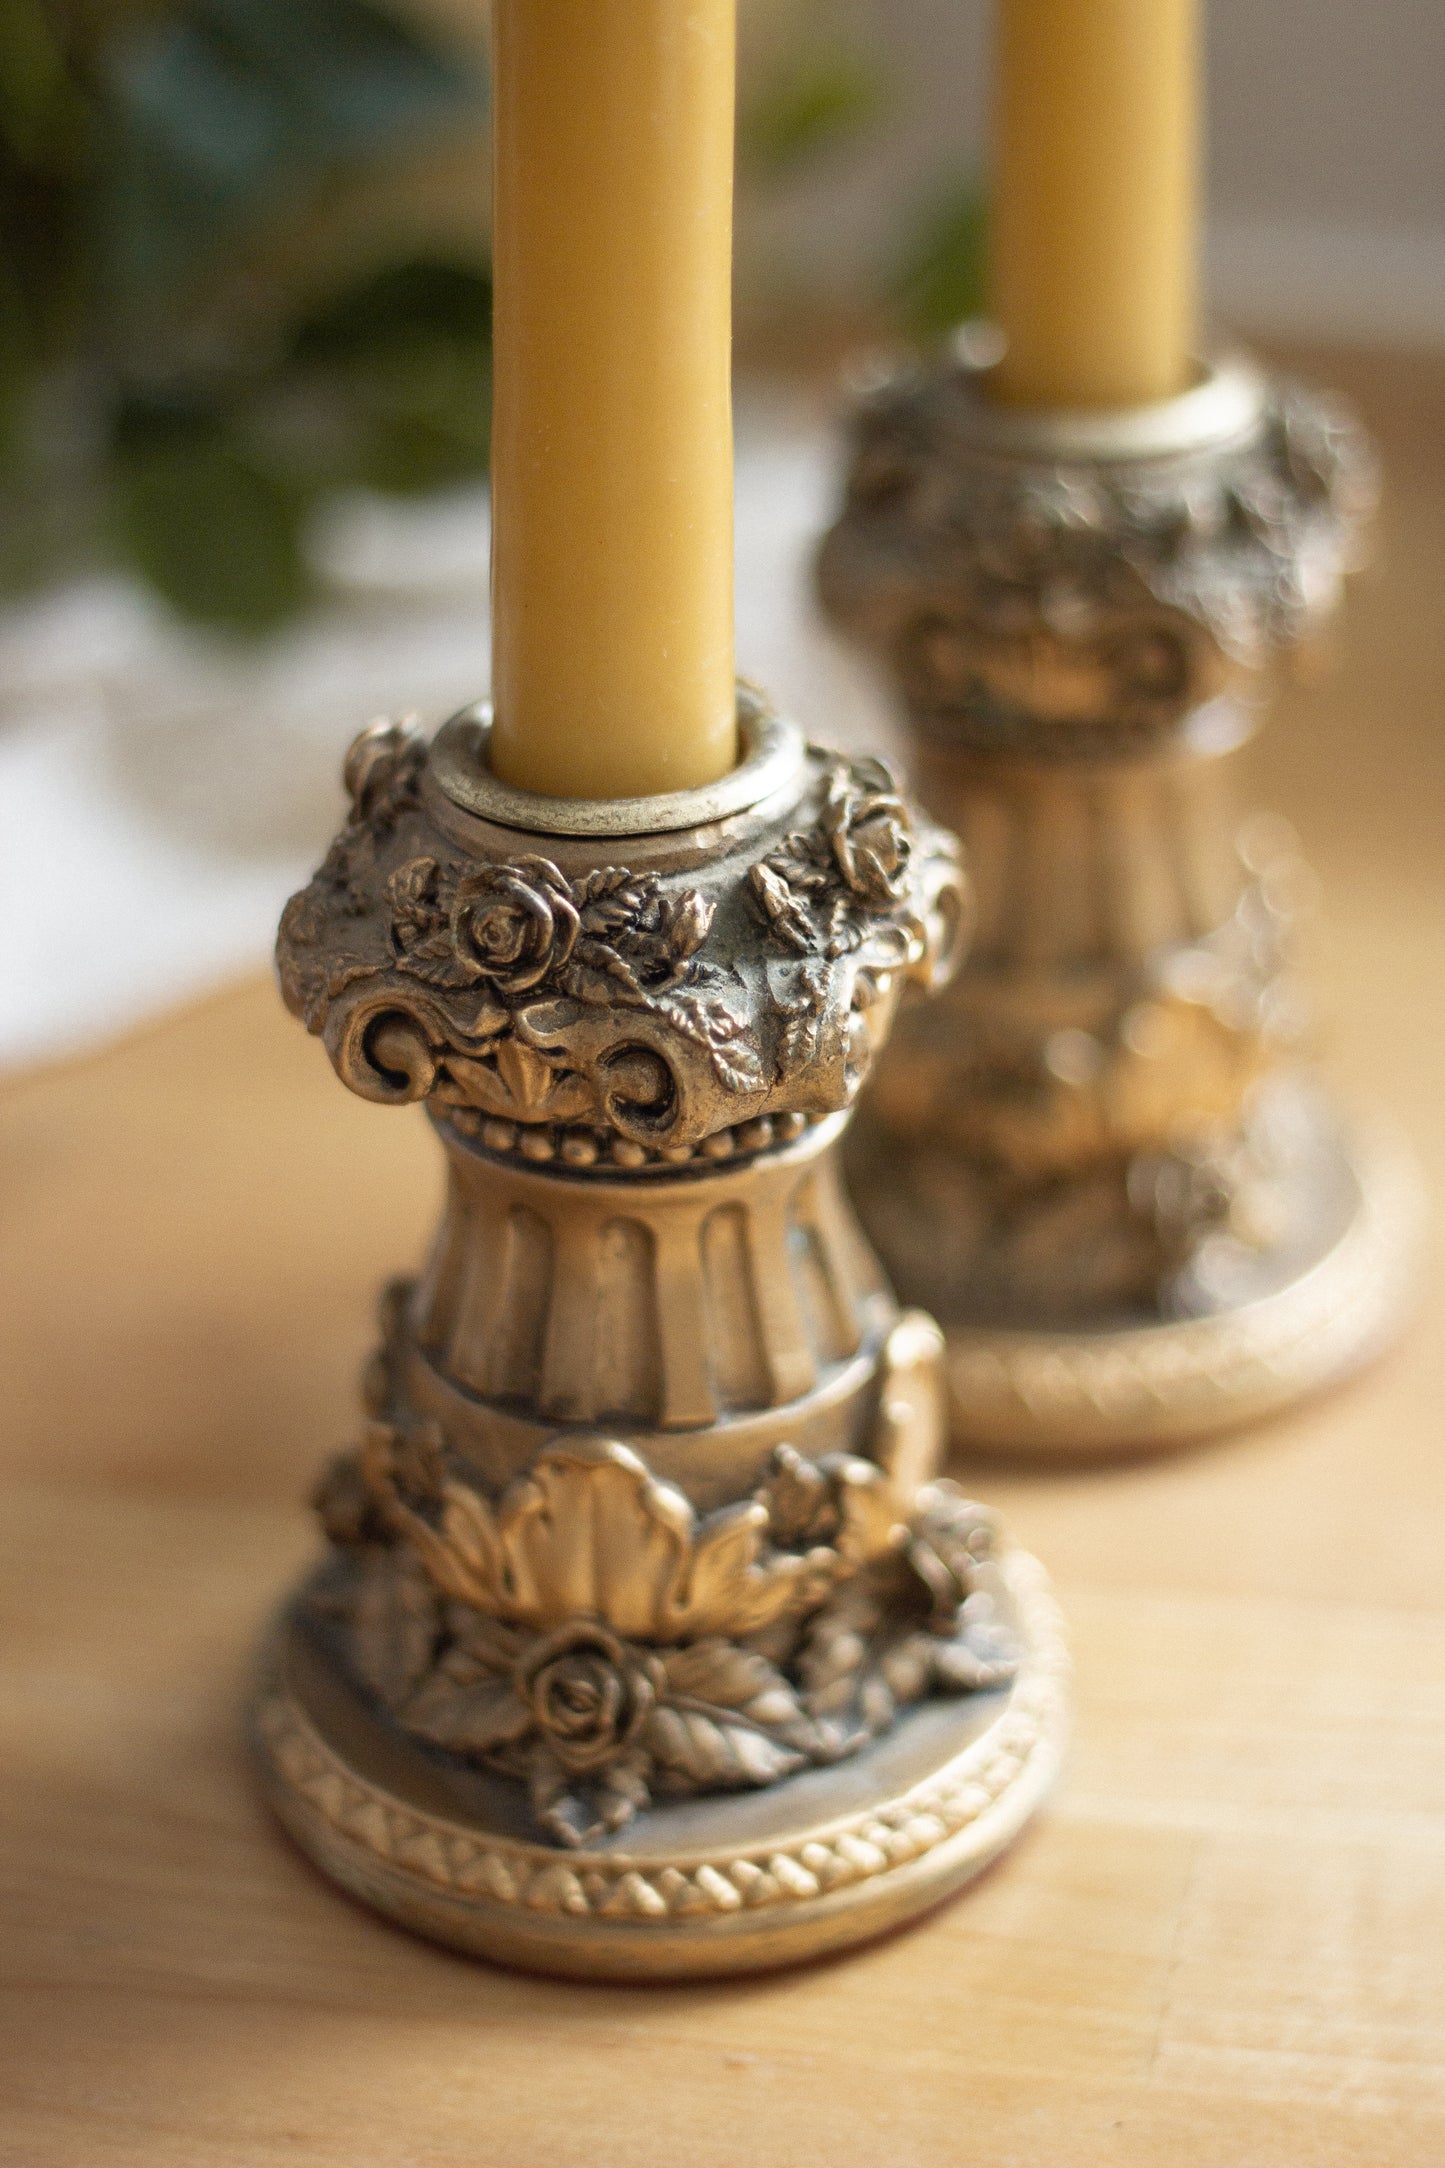 Victorian Candlesticks